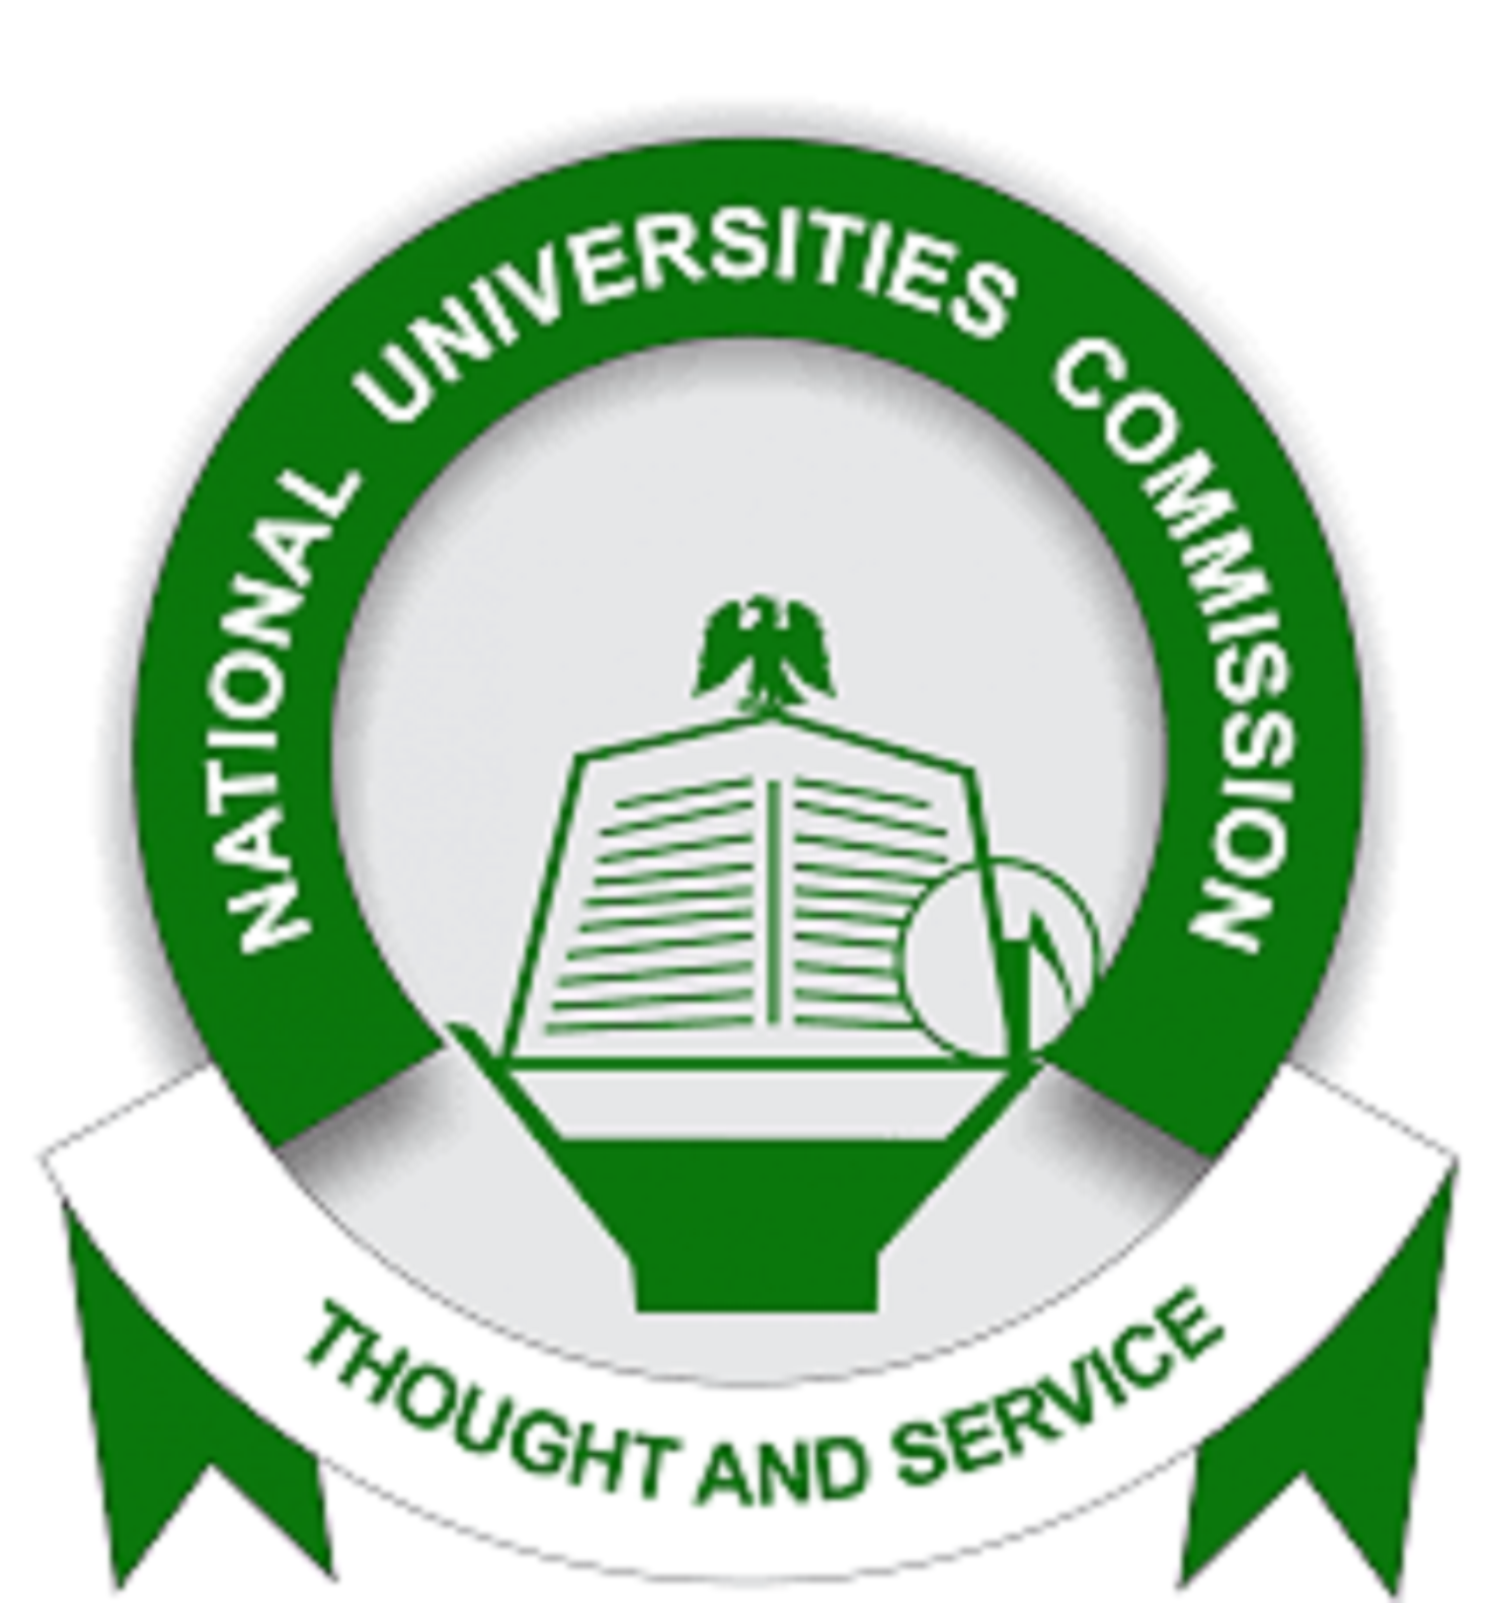 NUC approves establishment of Confluence University in Kogi